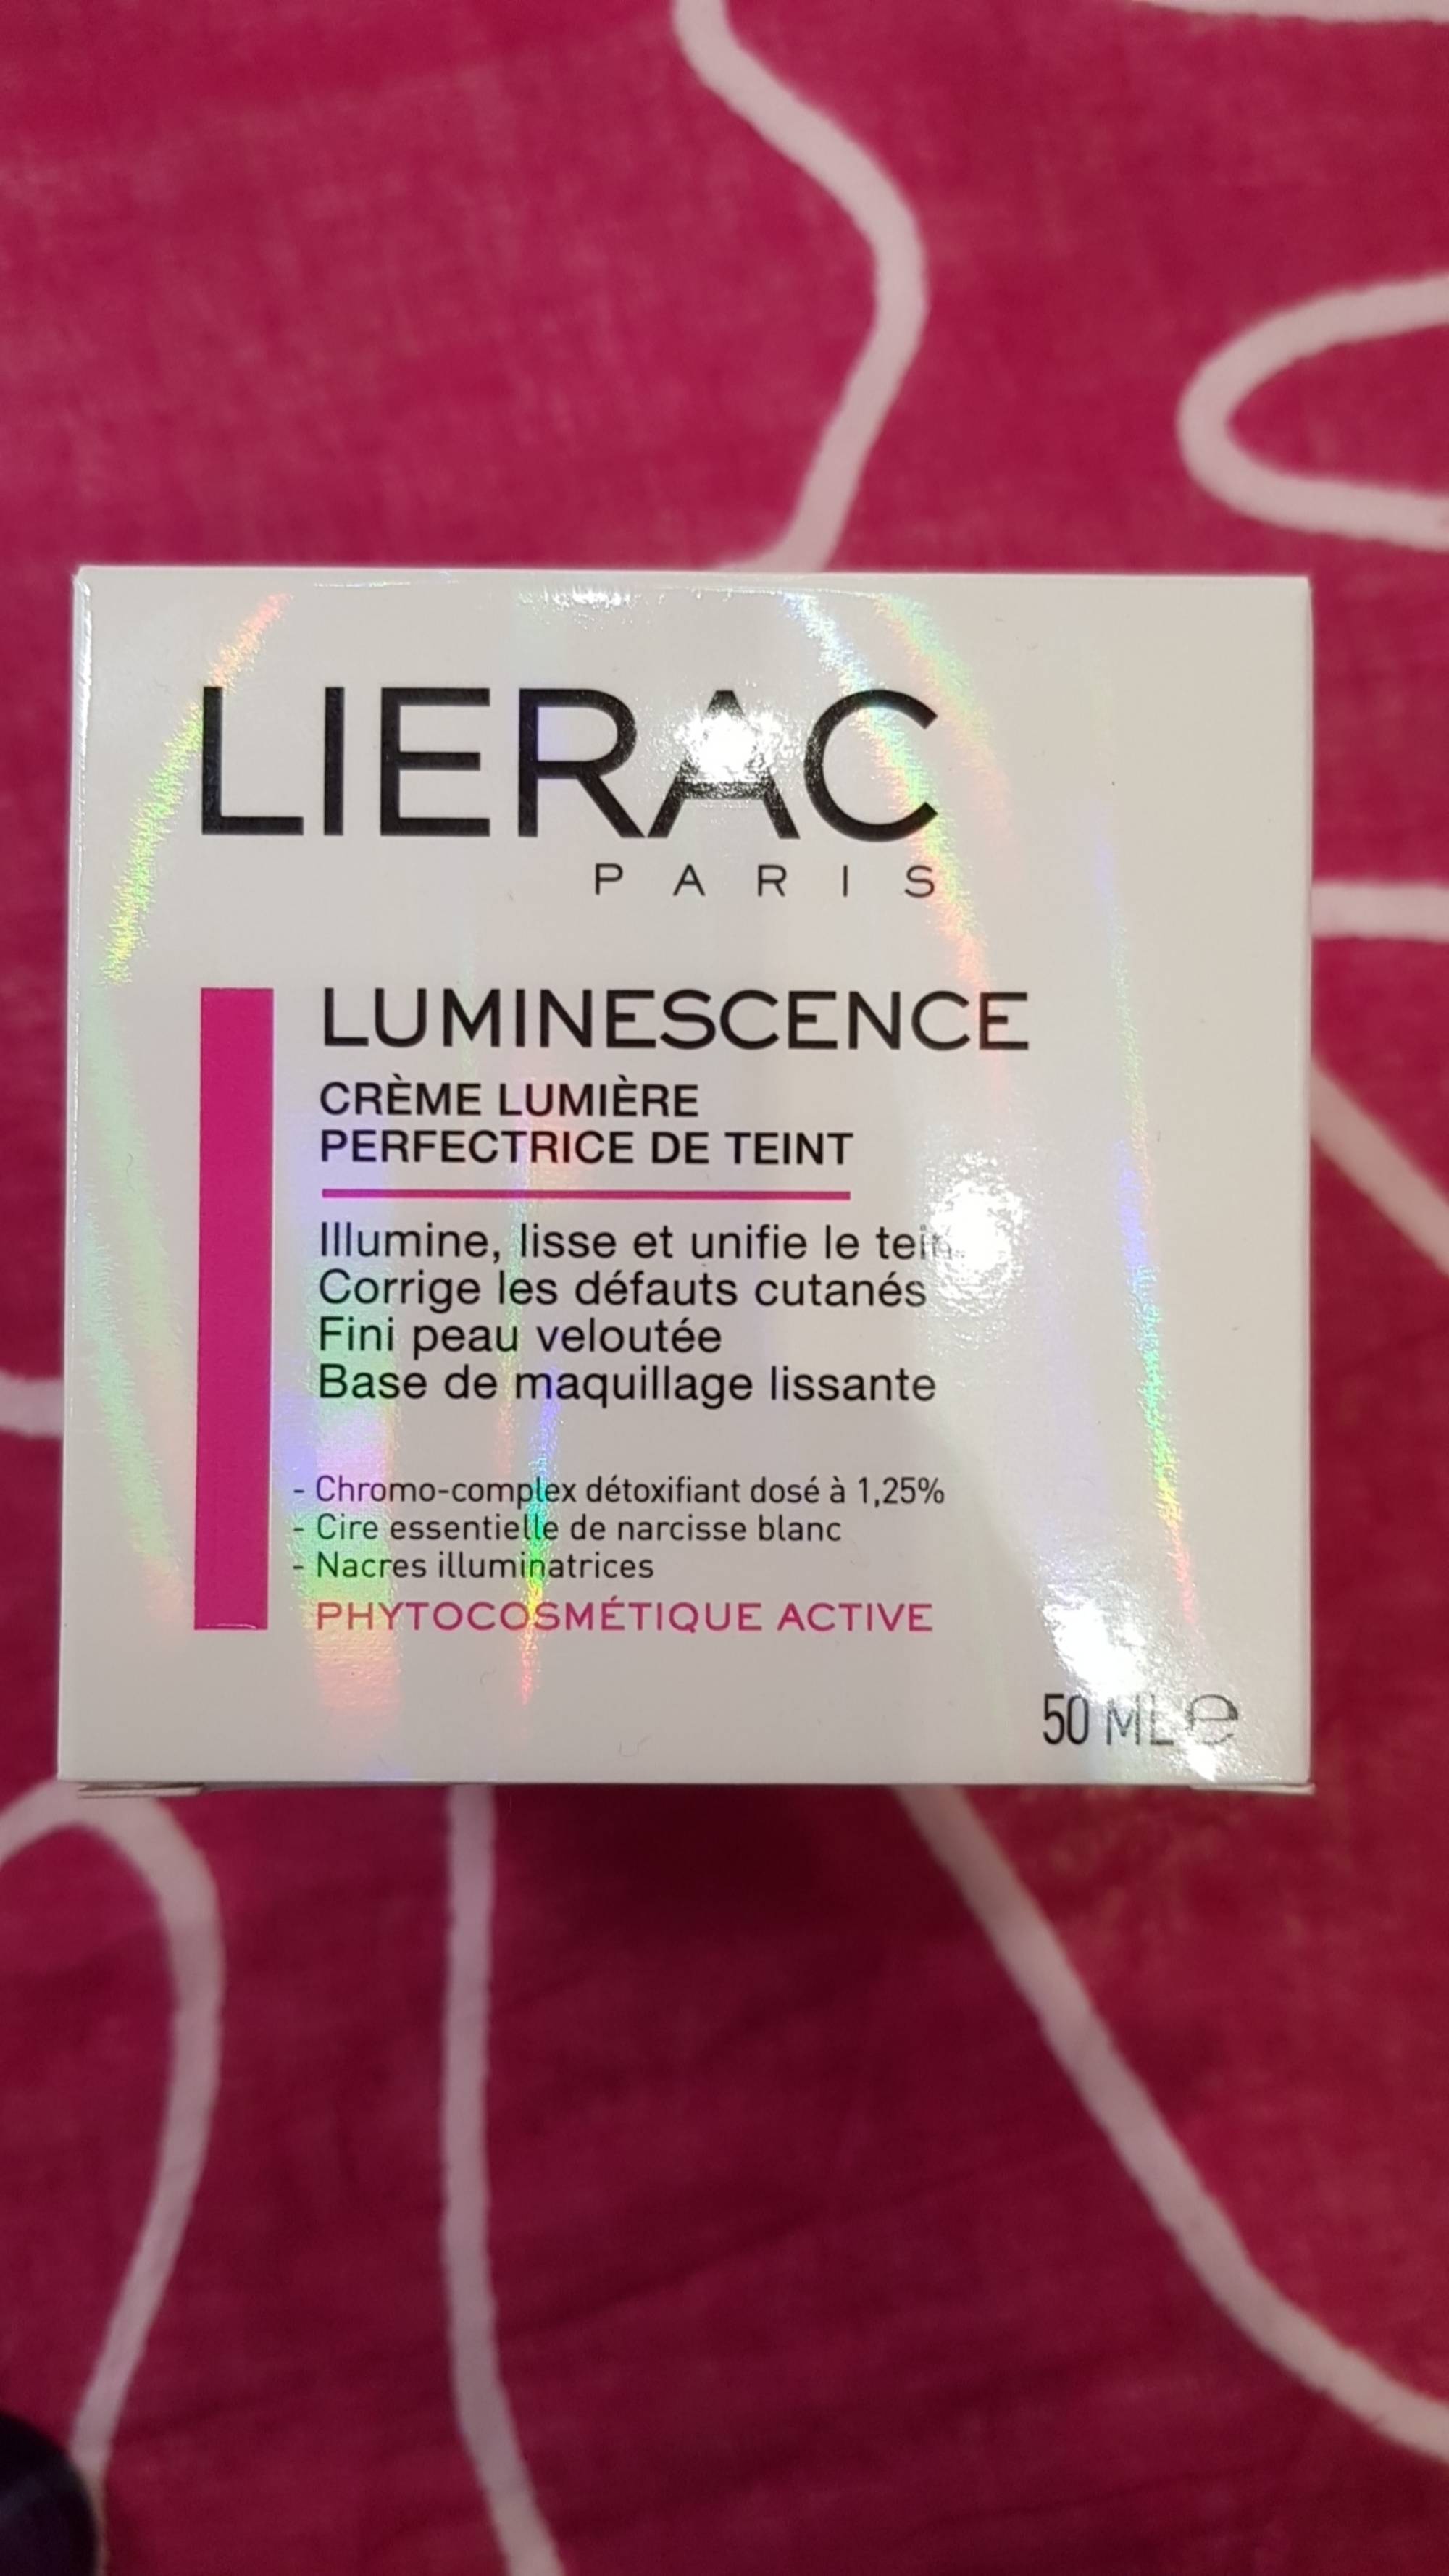 LIÉRAC - Luminescence - Crème lumière perfectrice de teint